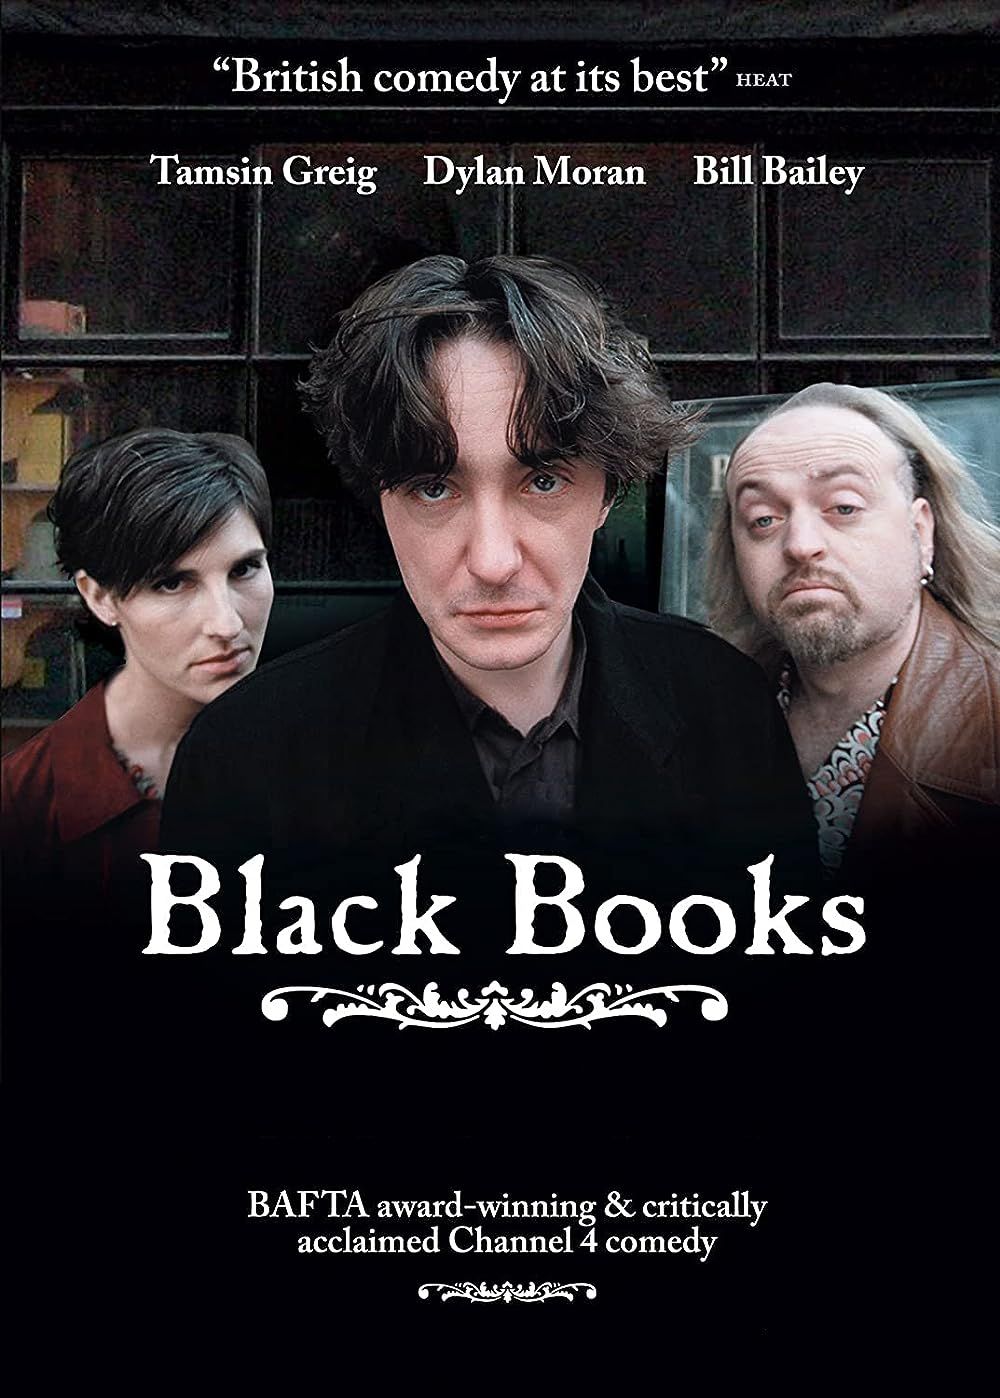 Promotional image for BLACK BOOKS